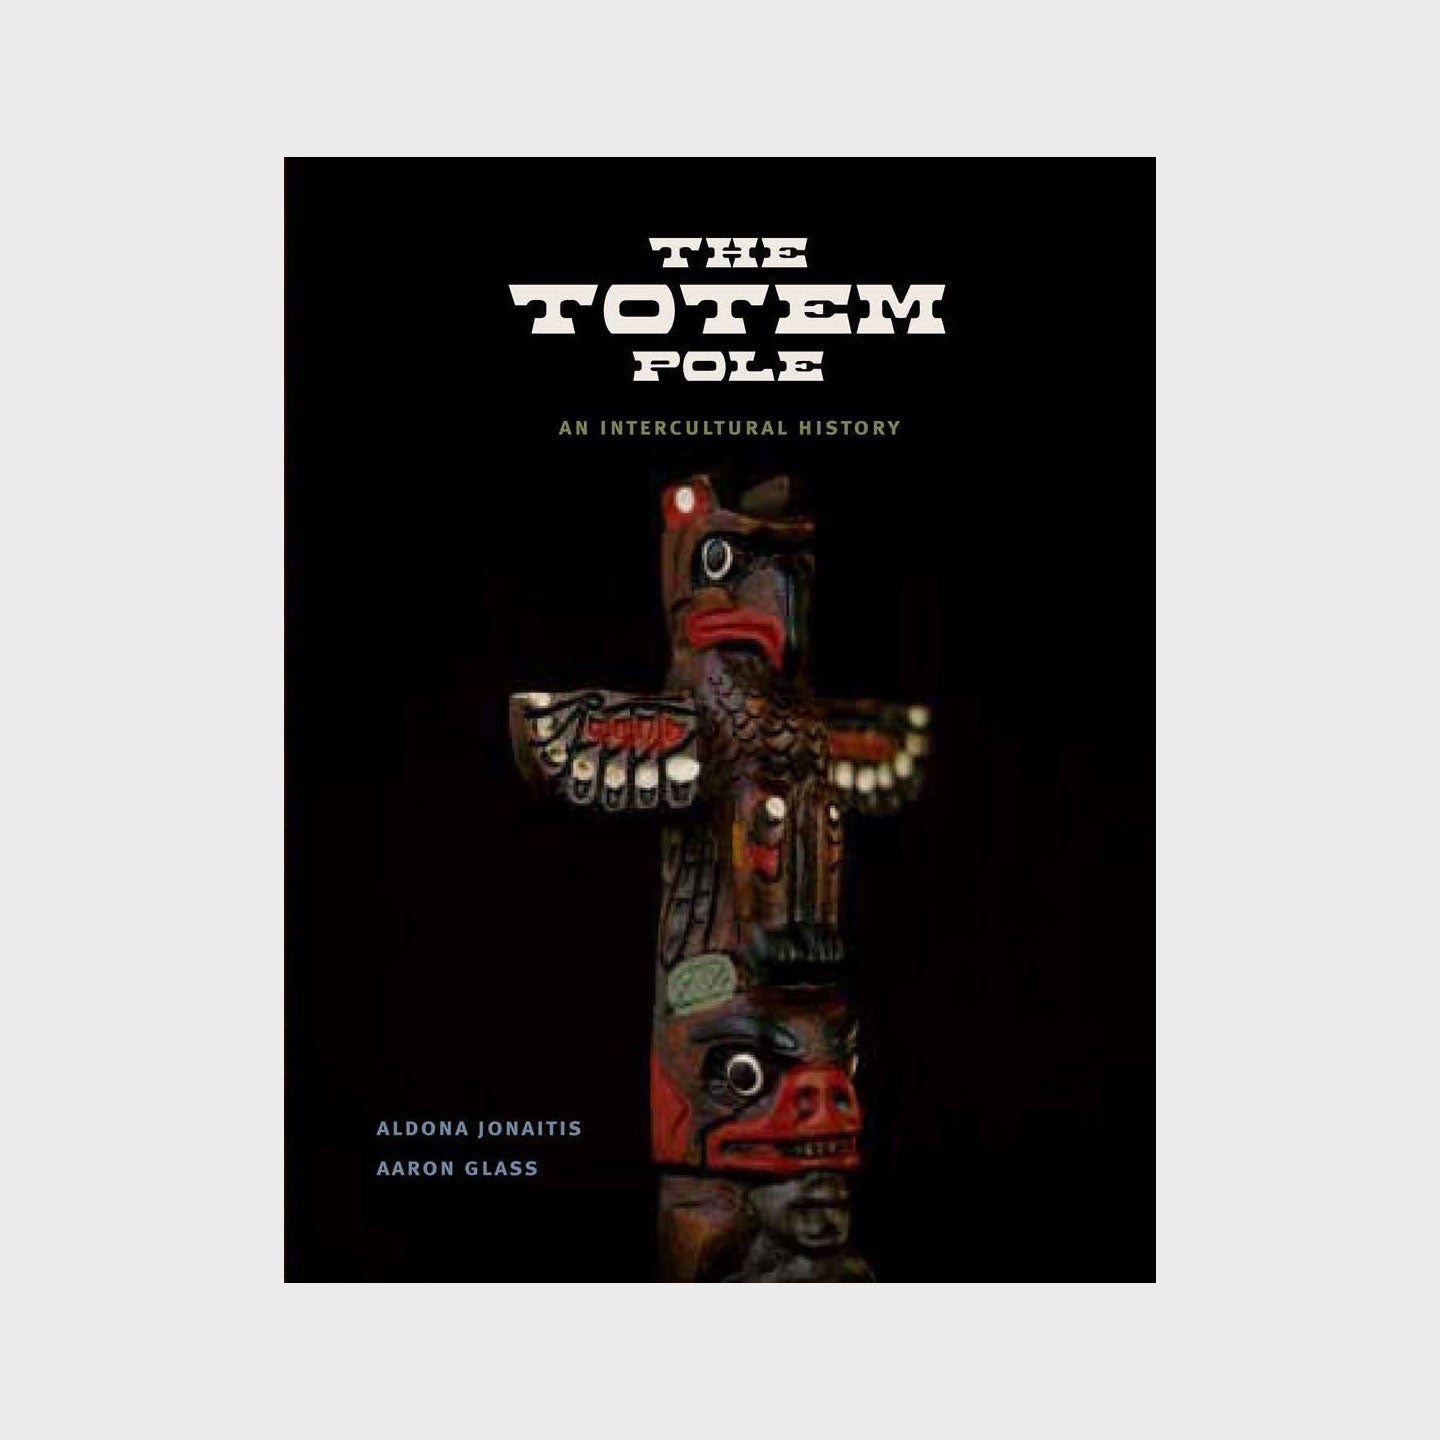 The Totem Pole: An Intercultural History by Aldona Jonaitis and Aaron Glass